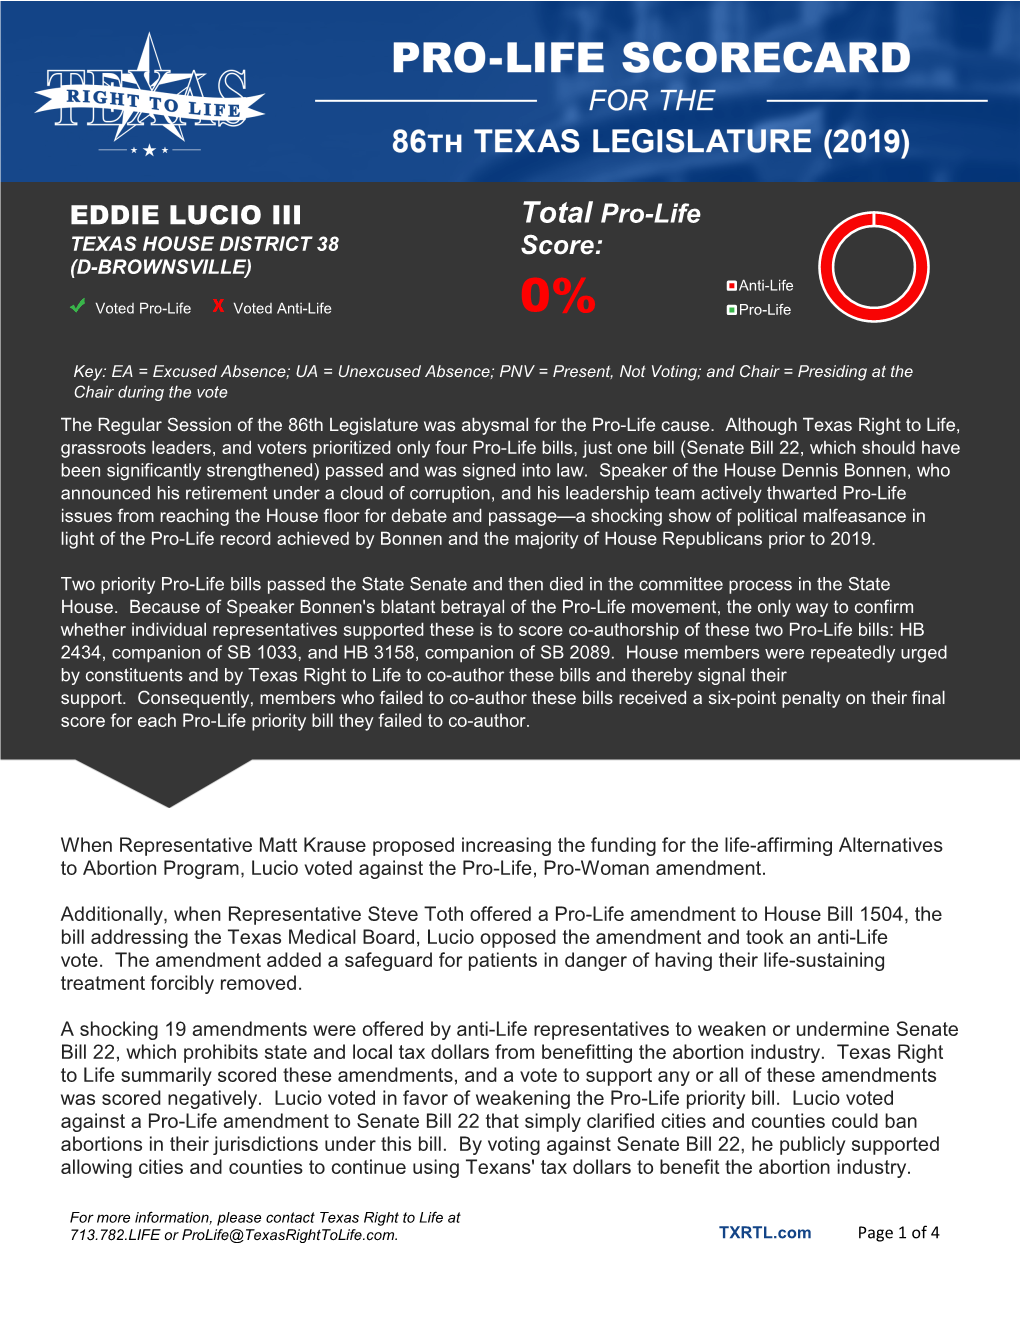 EDDIE LUCIO III Total Pro-Life Score